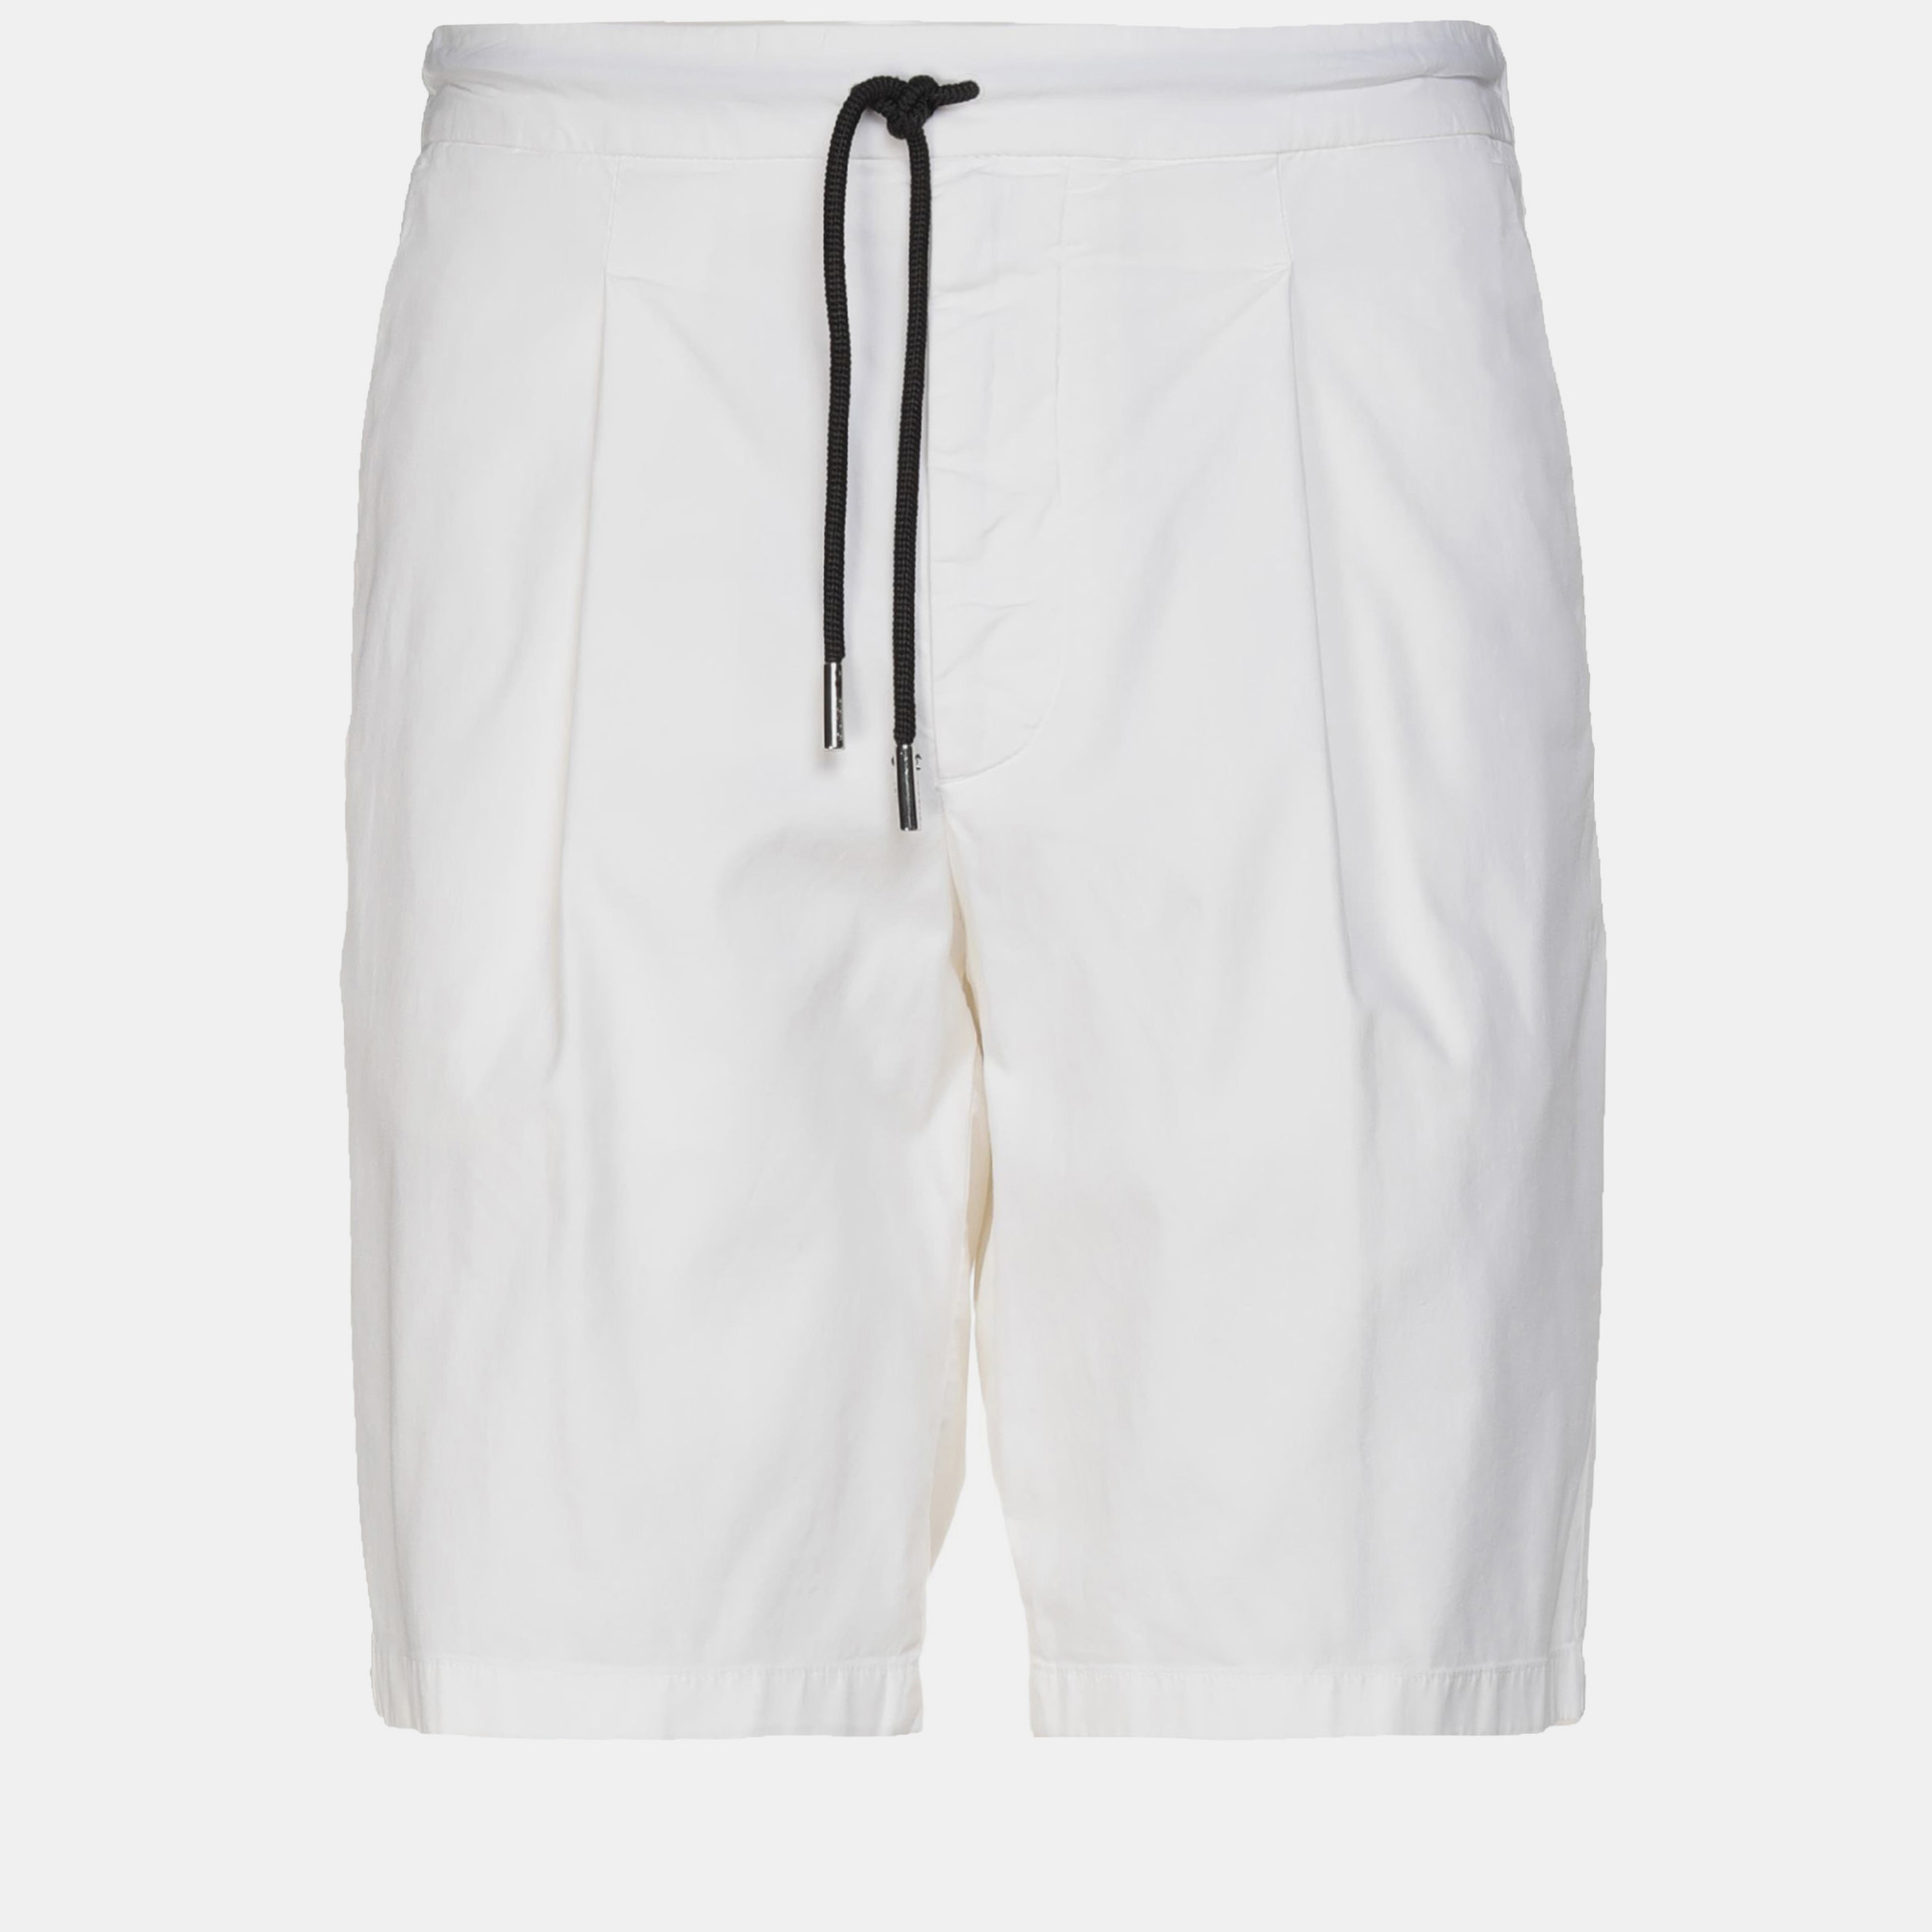 Giorgio armani white cotton drawstring shorts l (it 50)